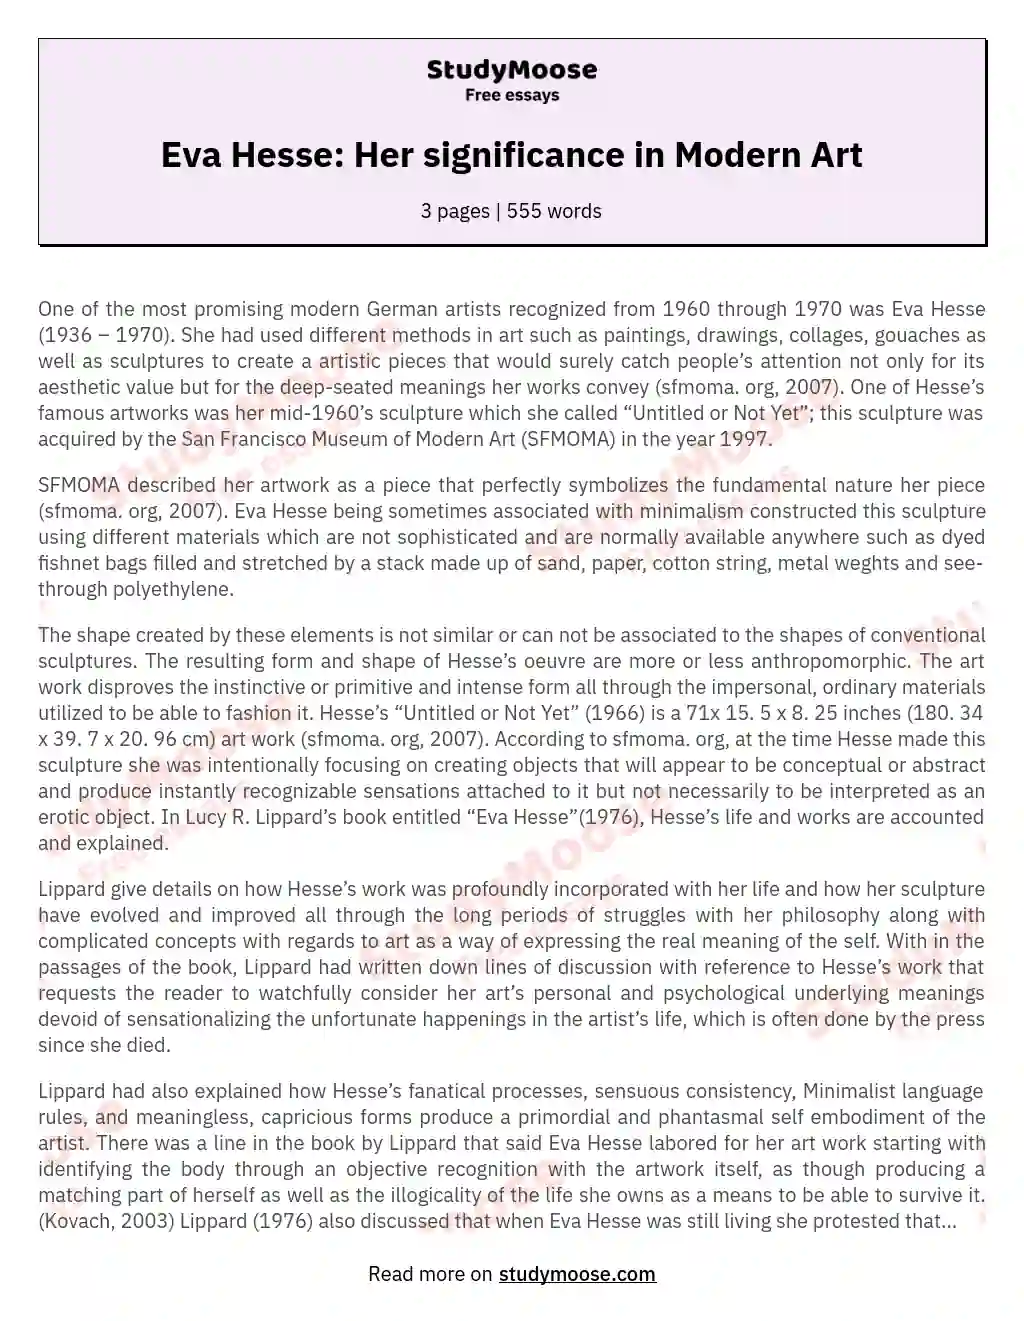 Eva Hesse:  Her significance in Modern Art essay